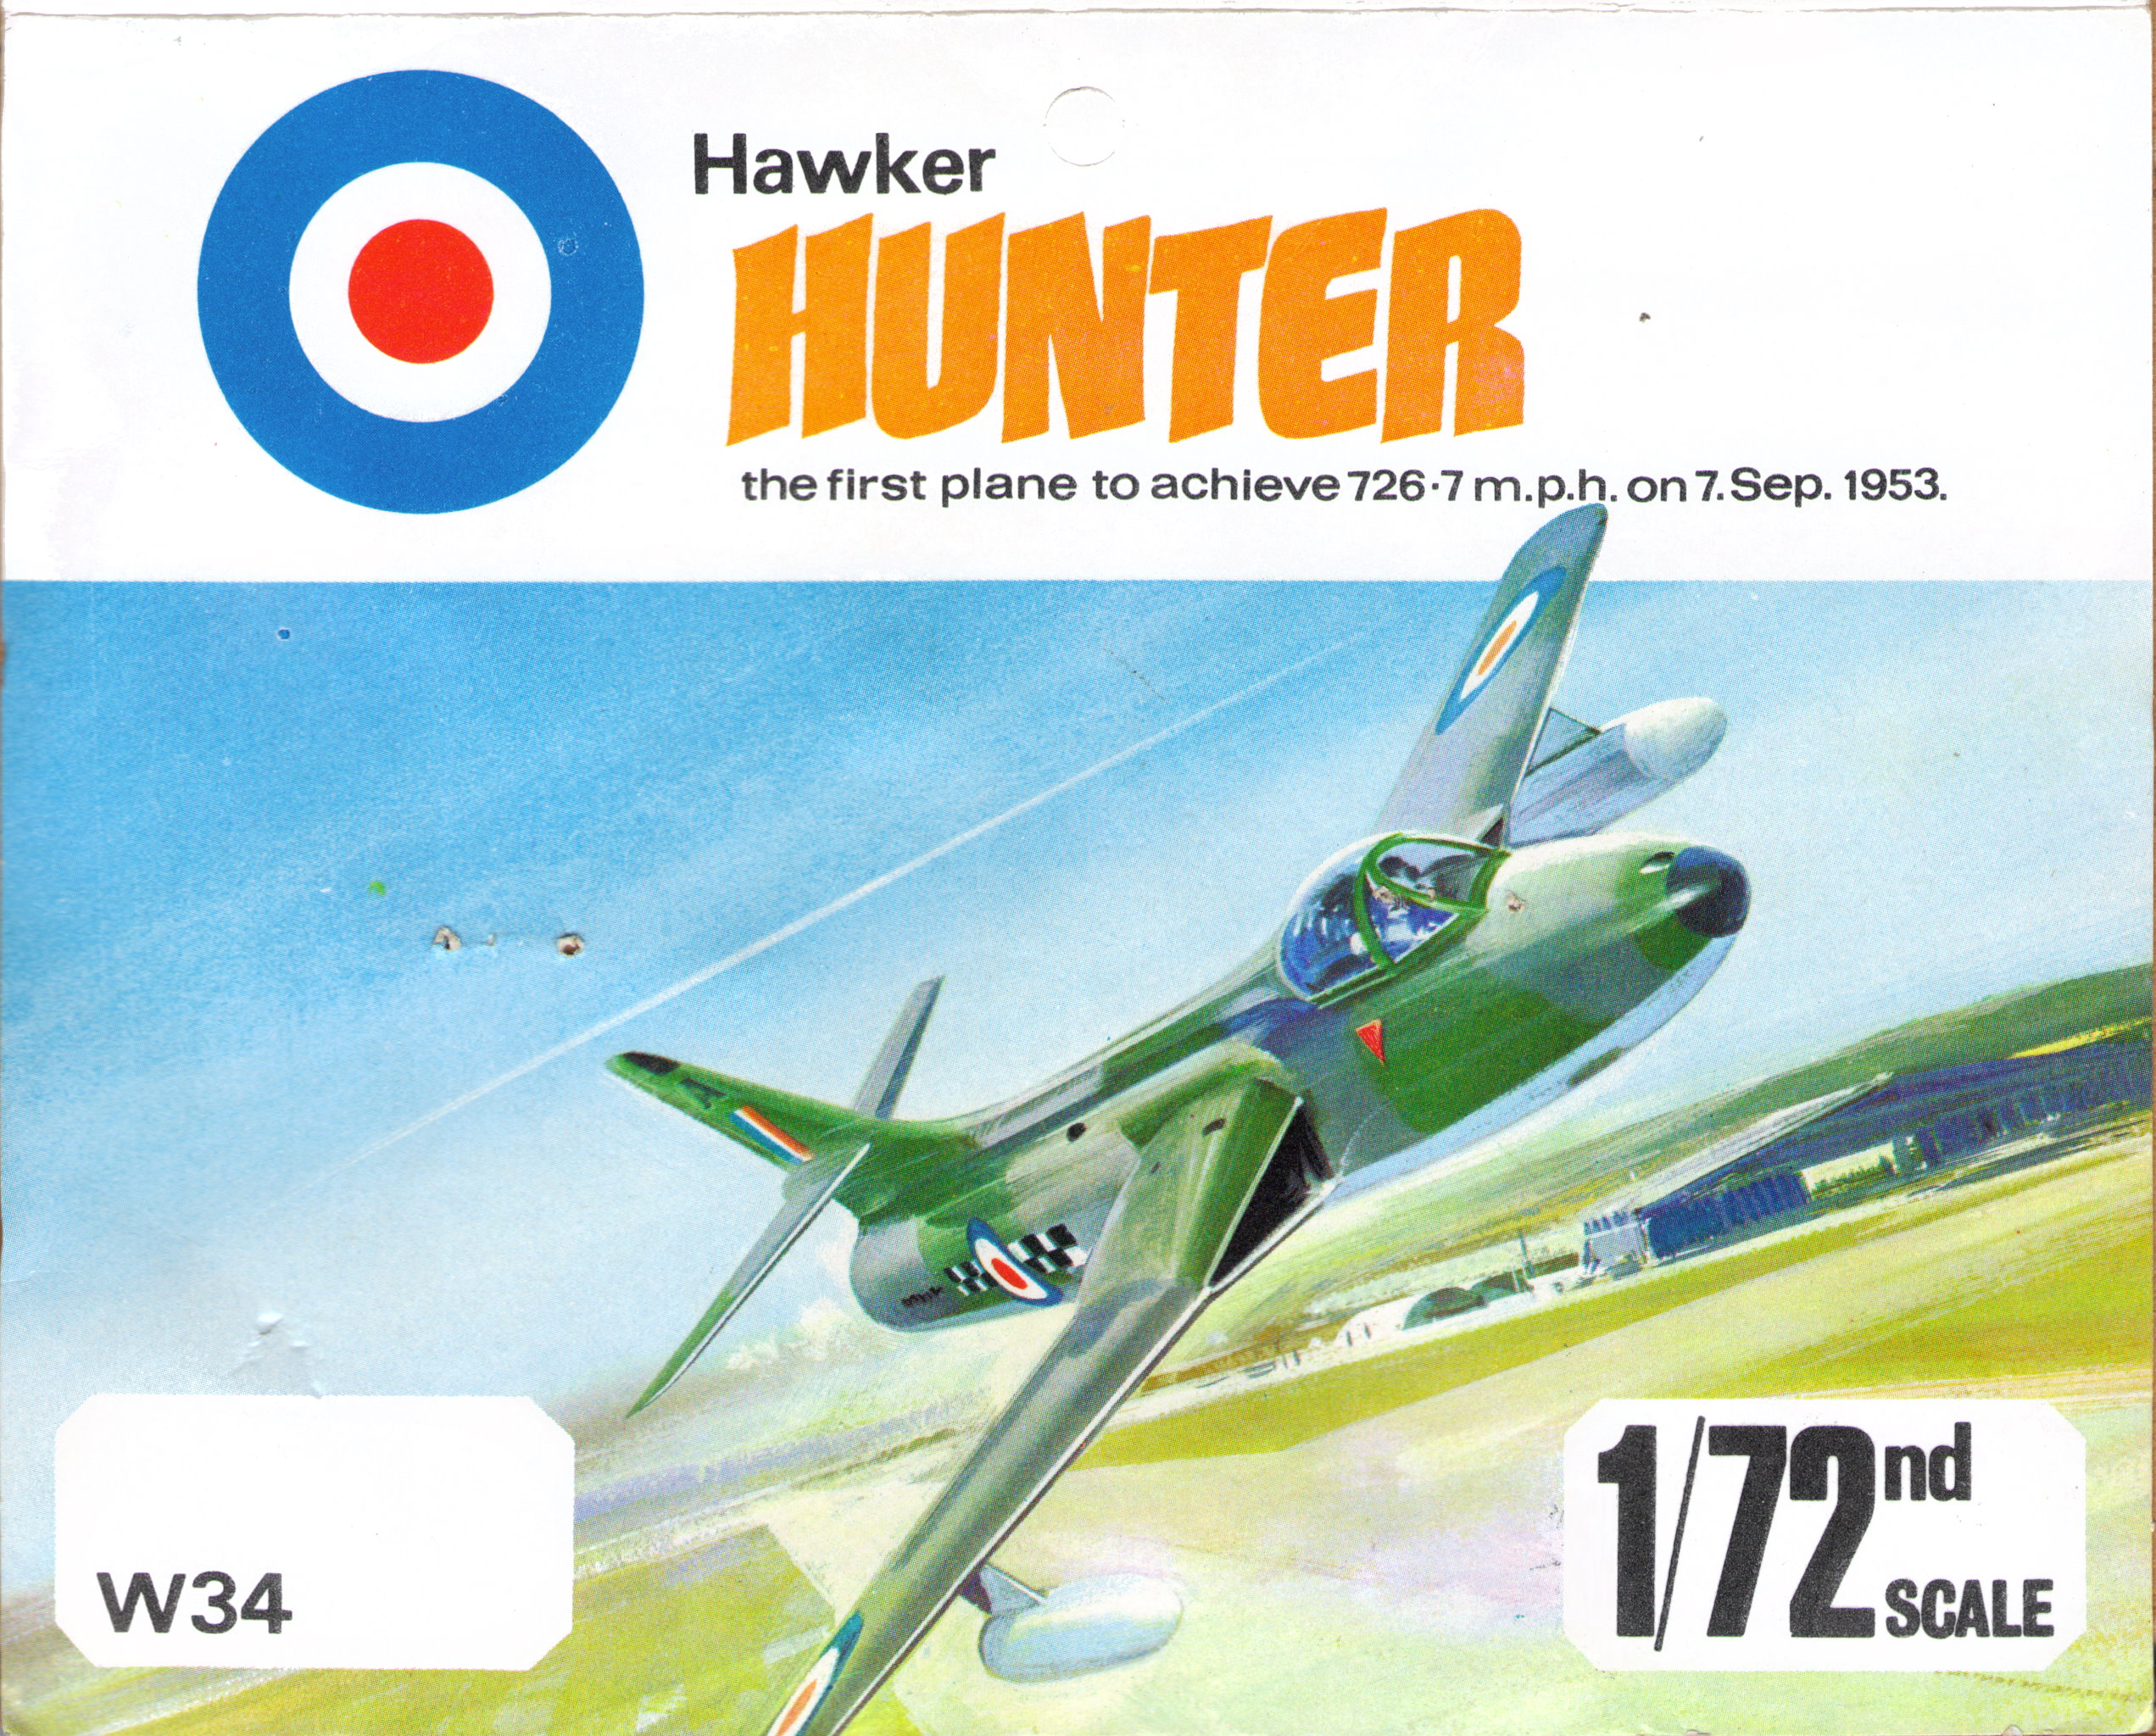 Rovex Ltd W34 Hawker Hunter, unbranded wholesale baged kit, 1968, лепесток (обе стороны)